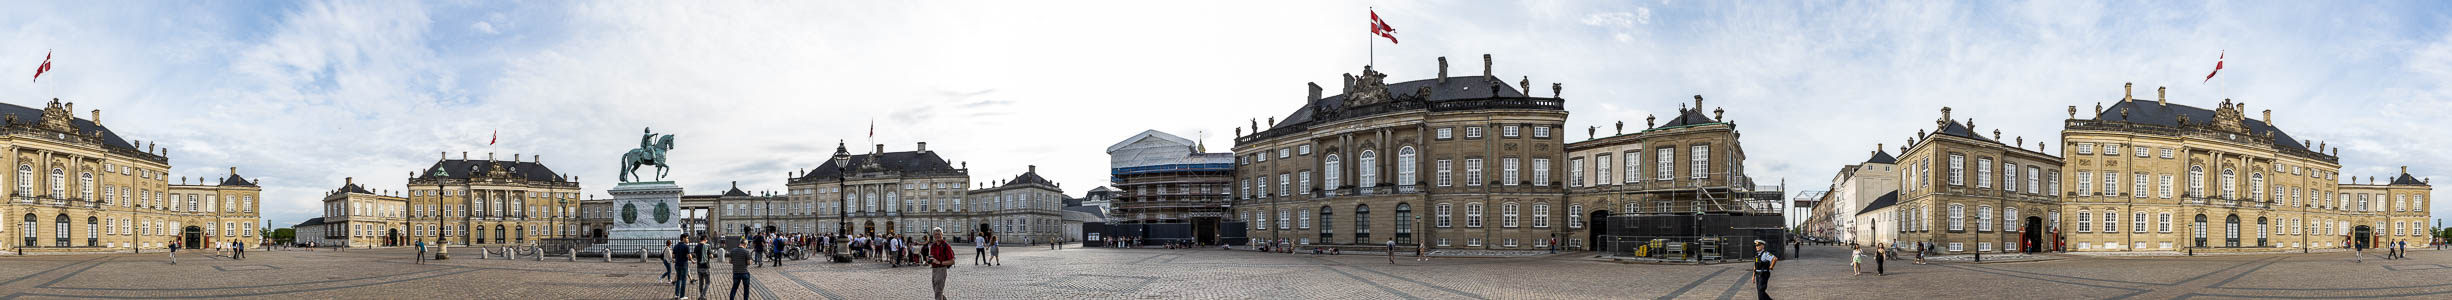 Schloss Amalienborg, Reiterstandbild Frederik V. Kopenhagen